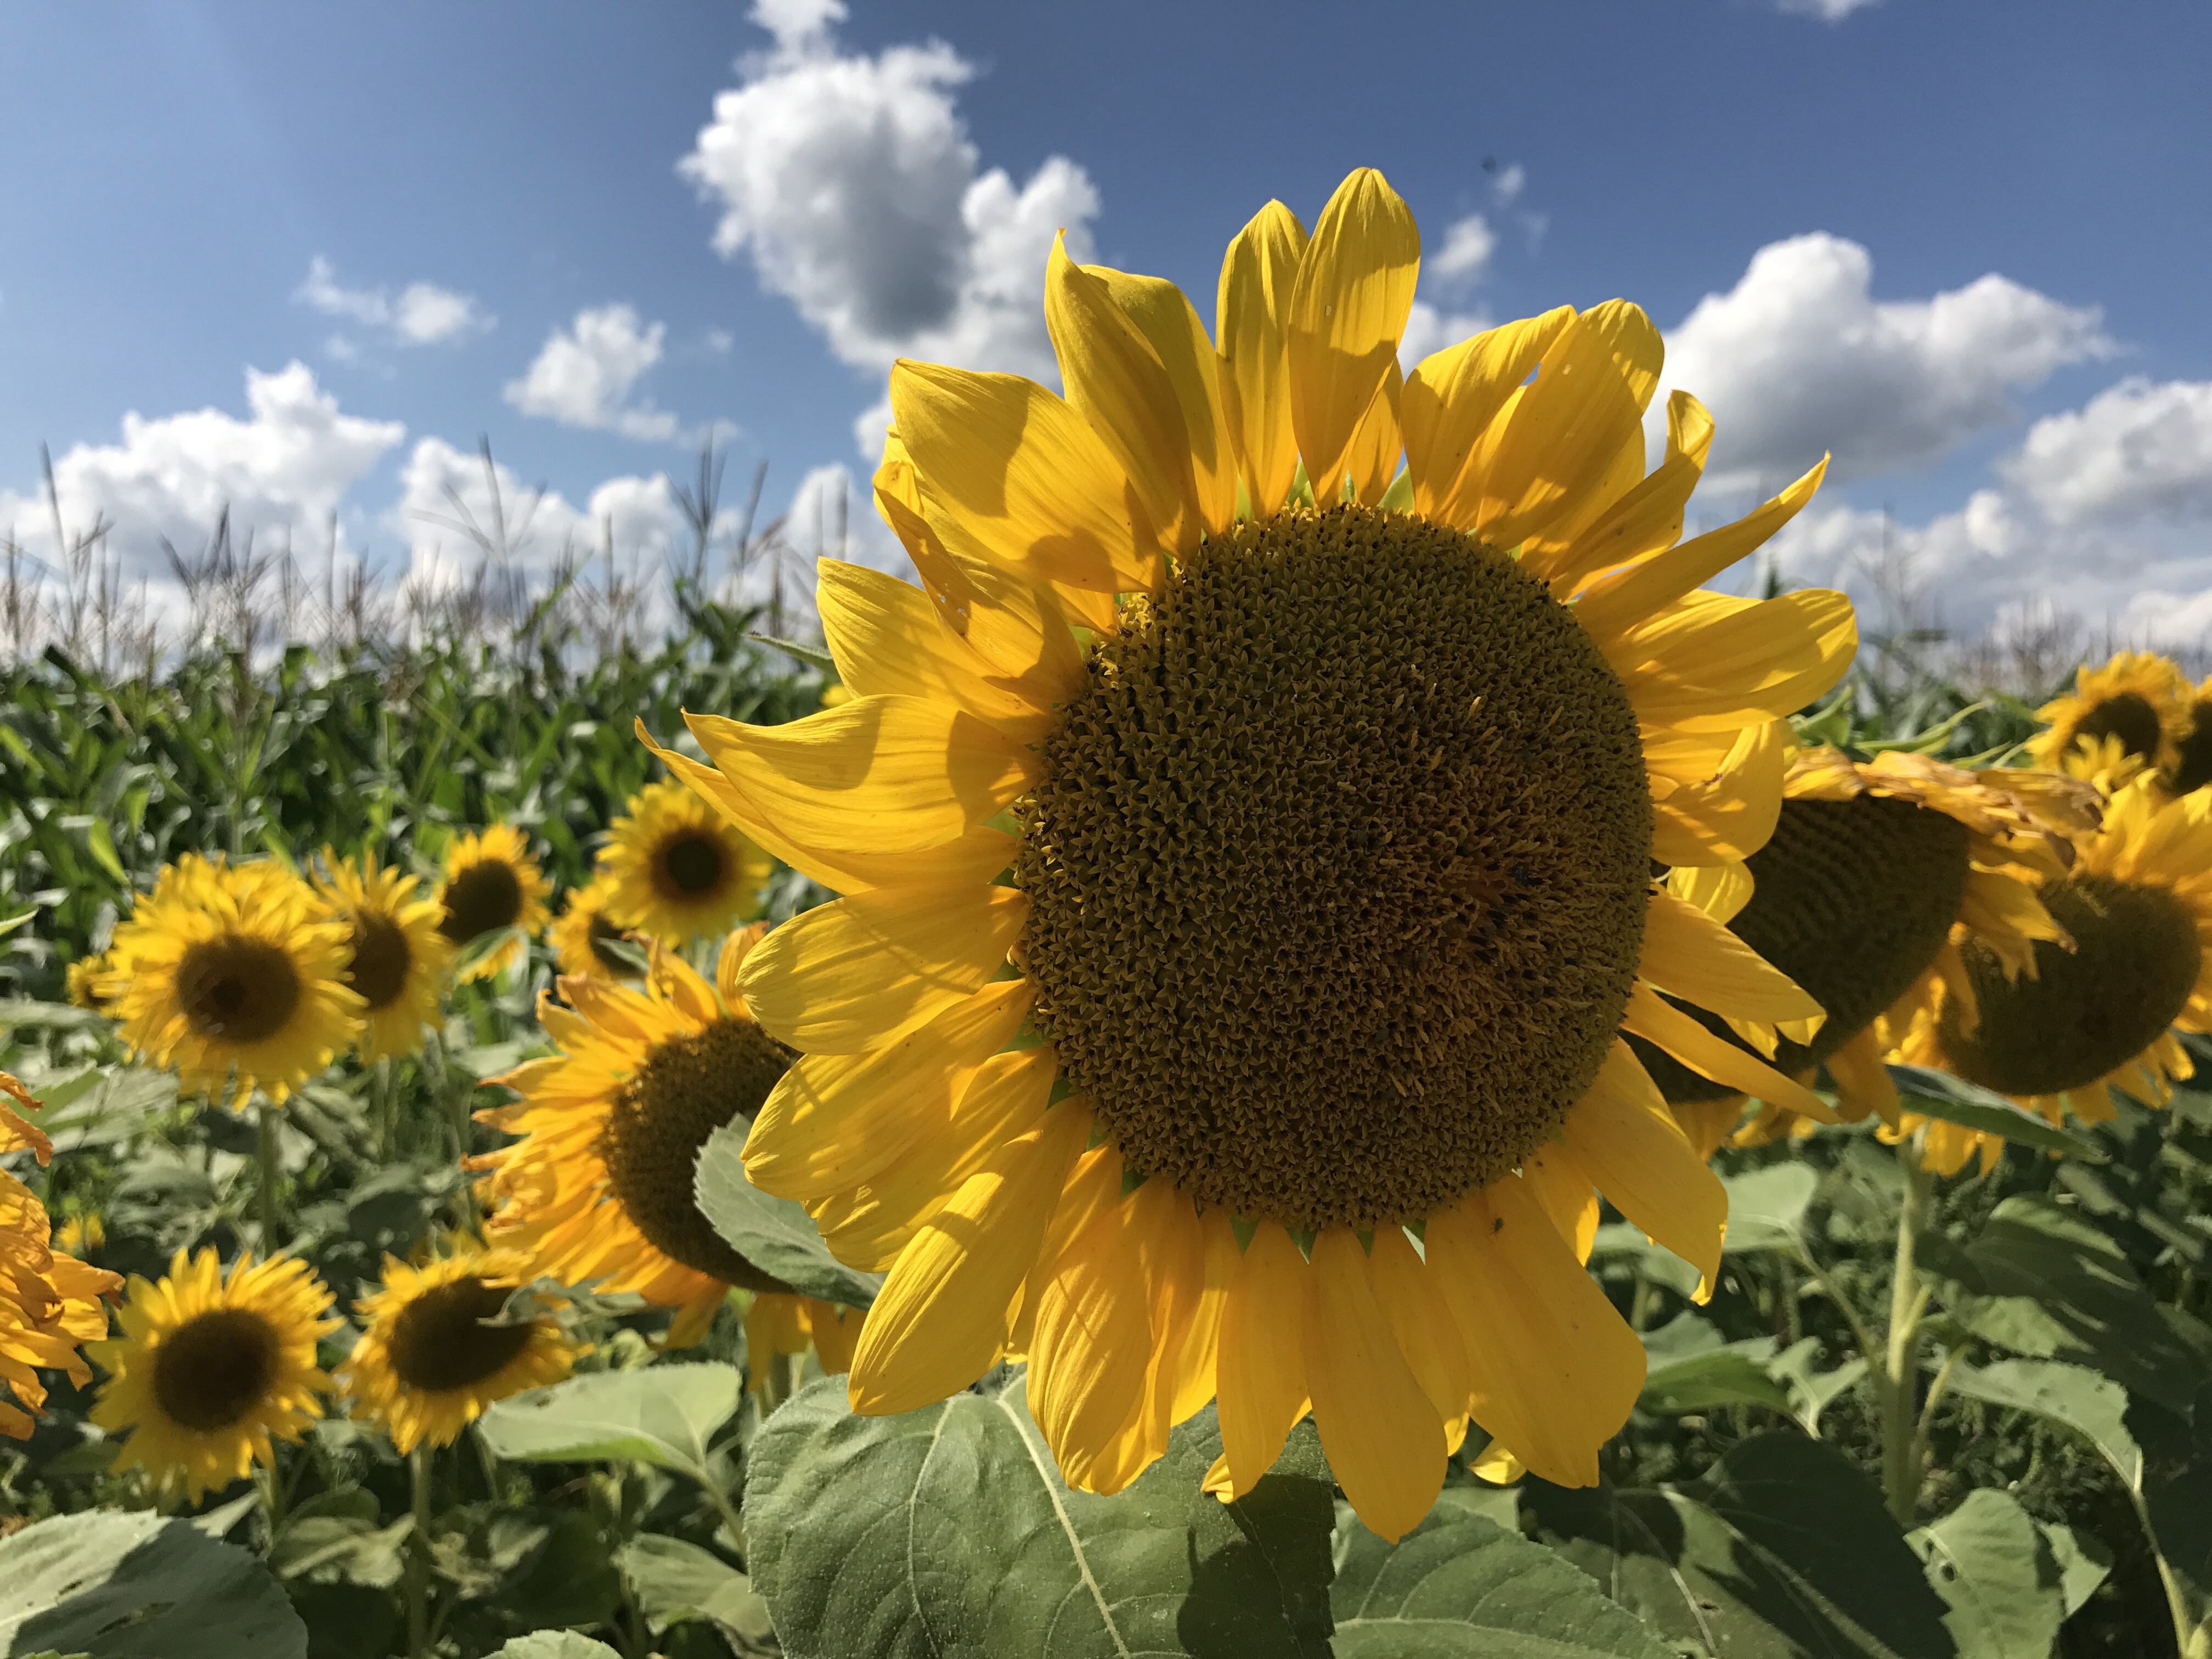 Sunflower Fields Forever | Barefoot in Bluejeans